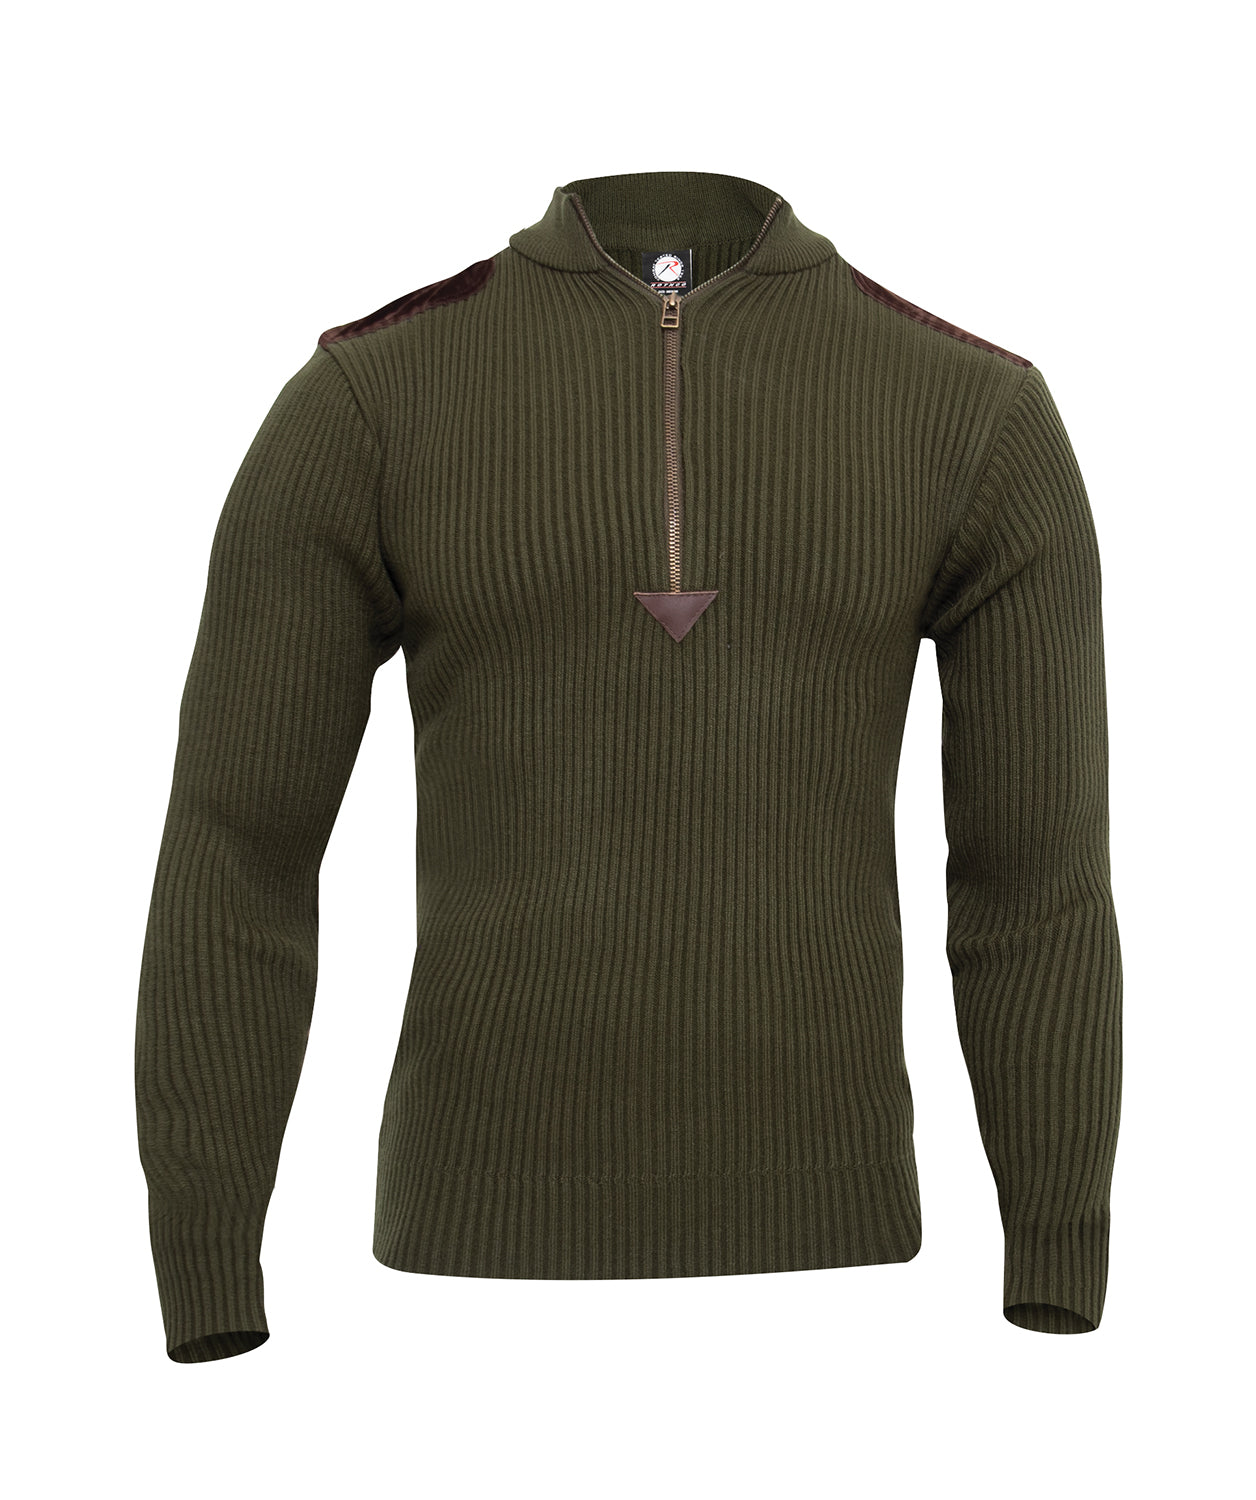 Rothco Quarter Zip Acrylic Commando Sweater - Tactical Choice Plus